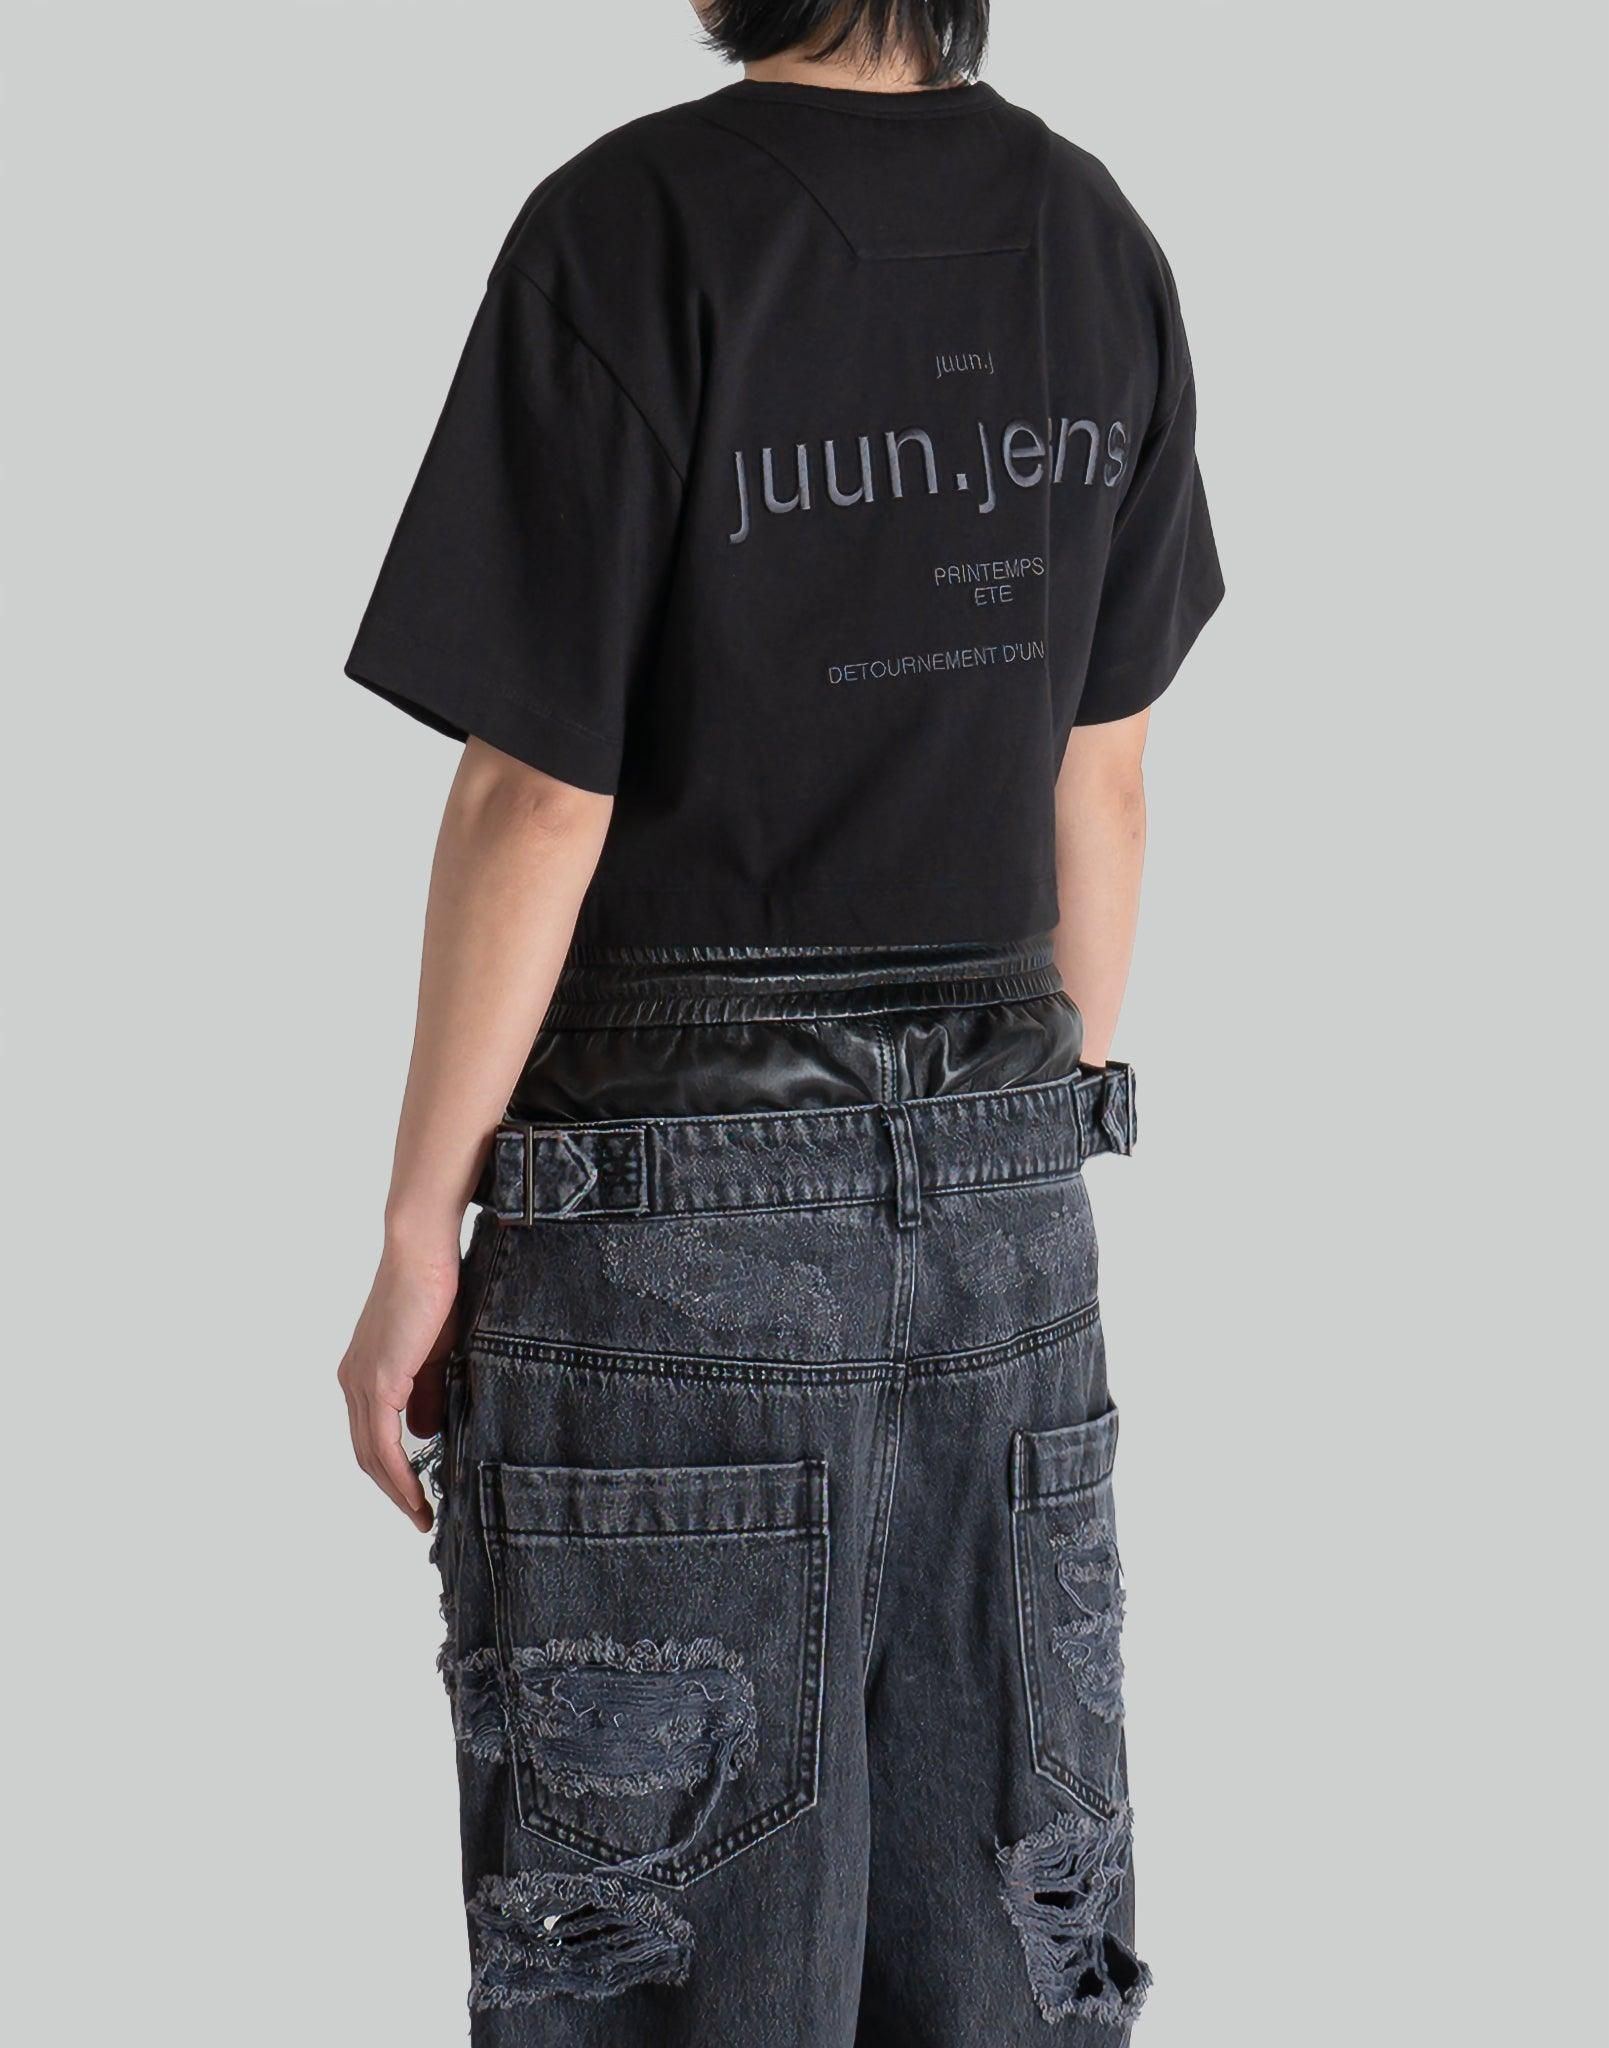 Juun.J Juun.Jeans Embroidered Regular Fit Cropped Top - 082plus